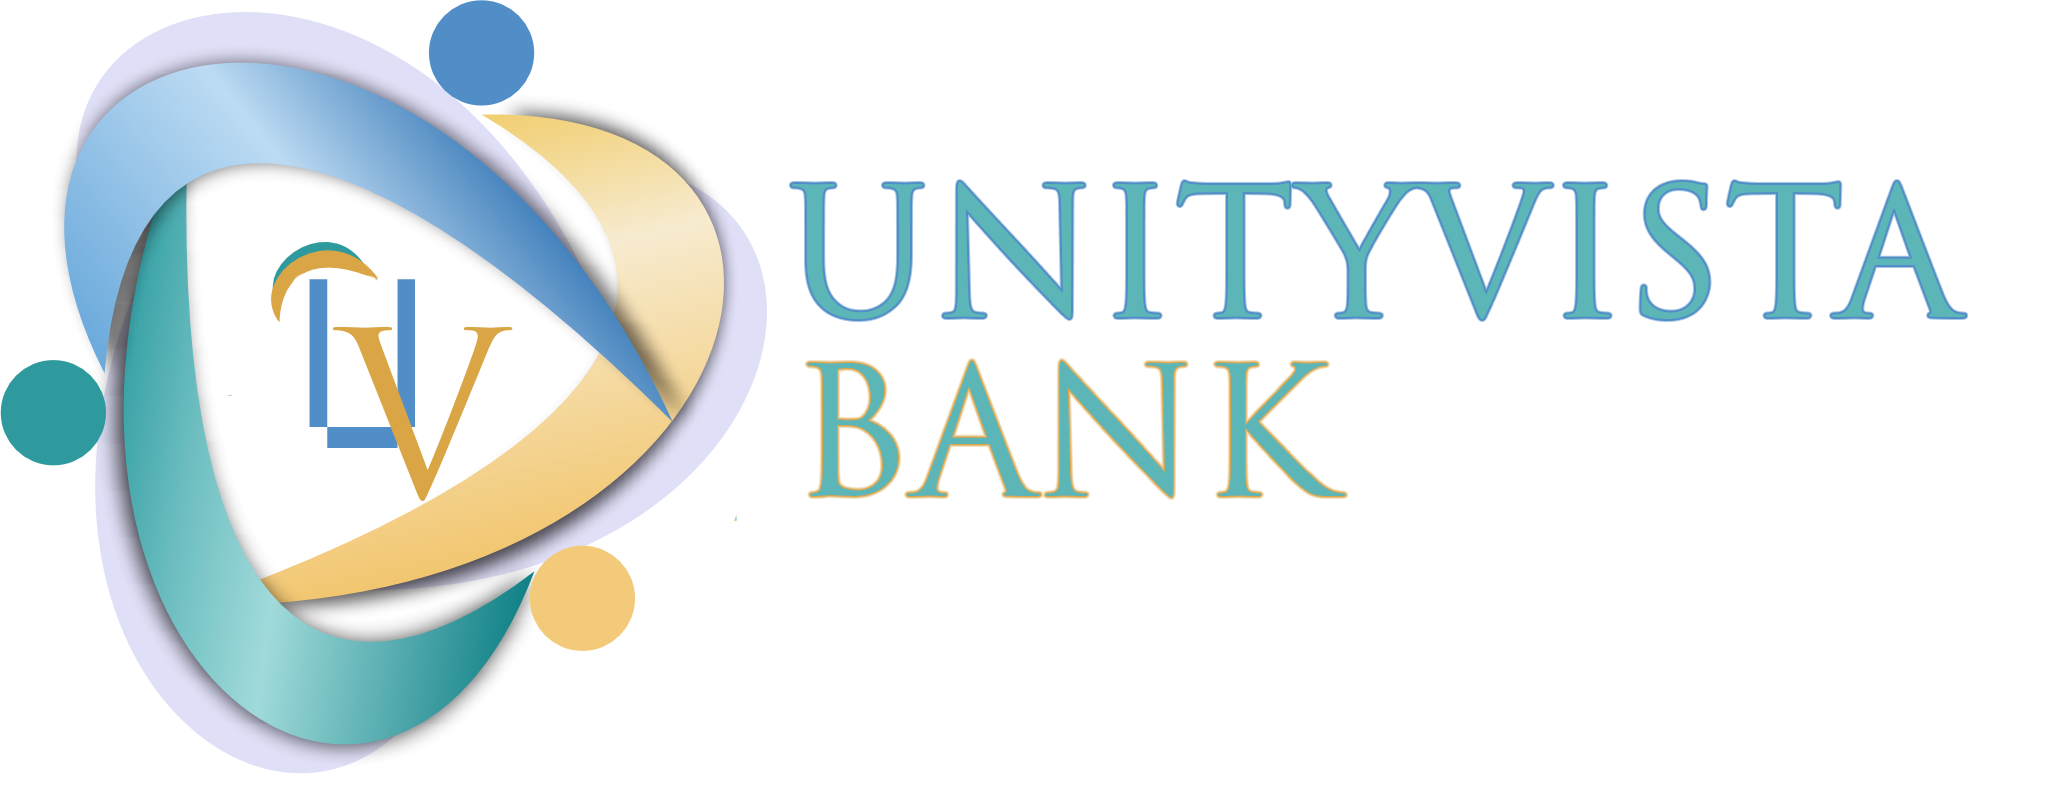 UnityVista Bank  